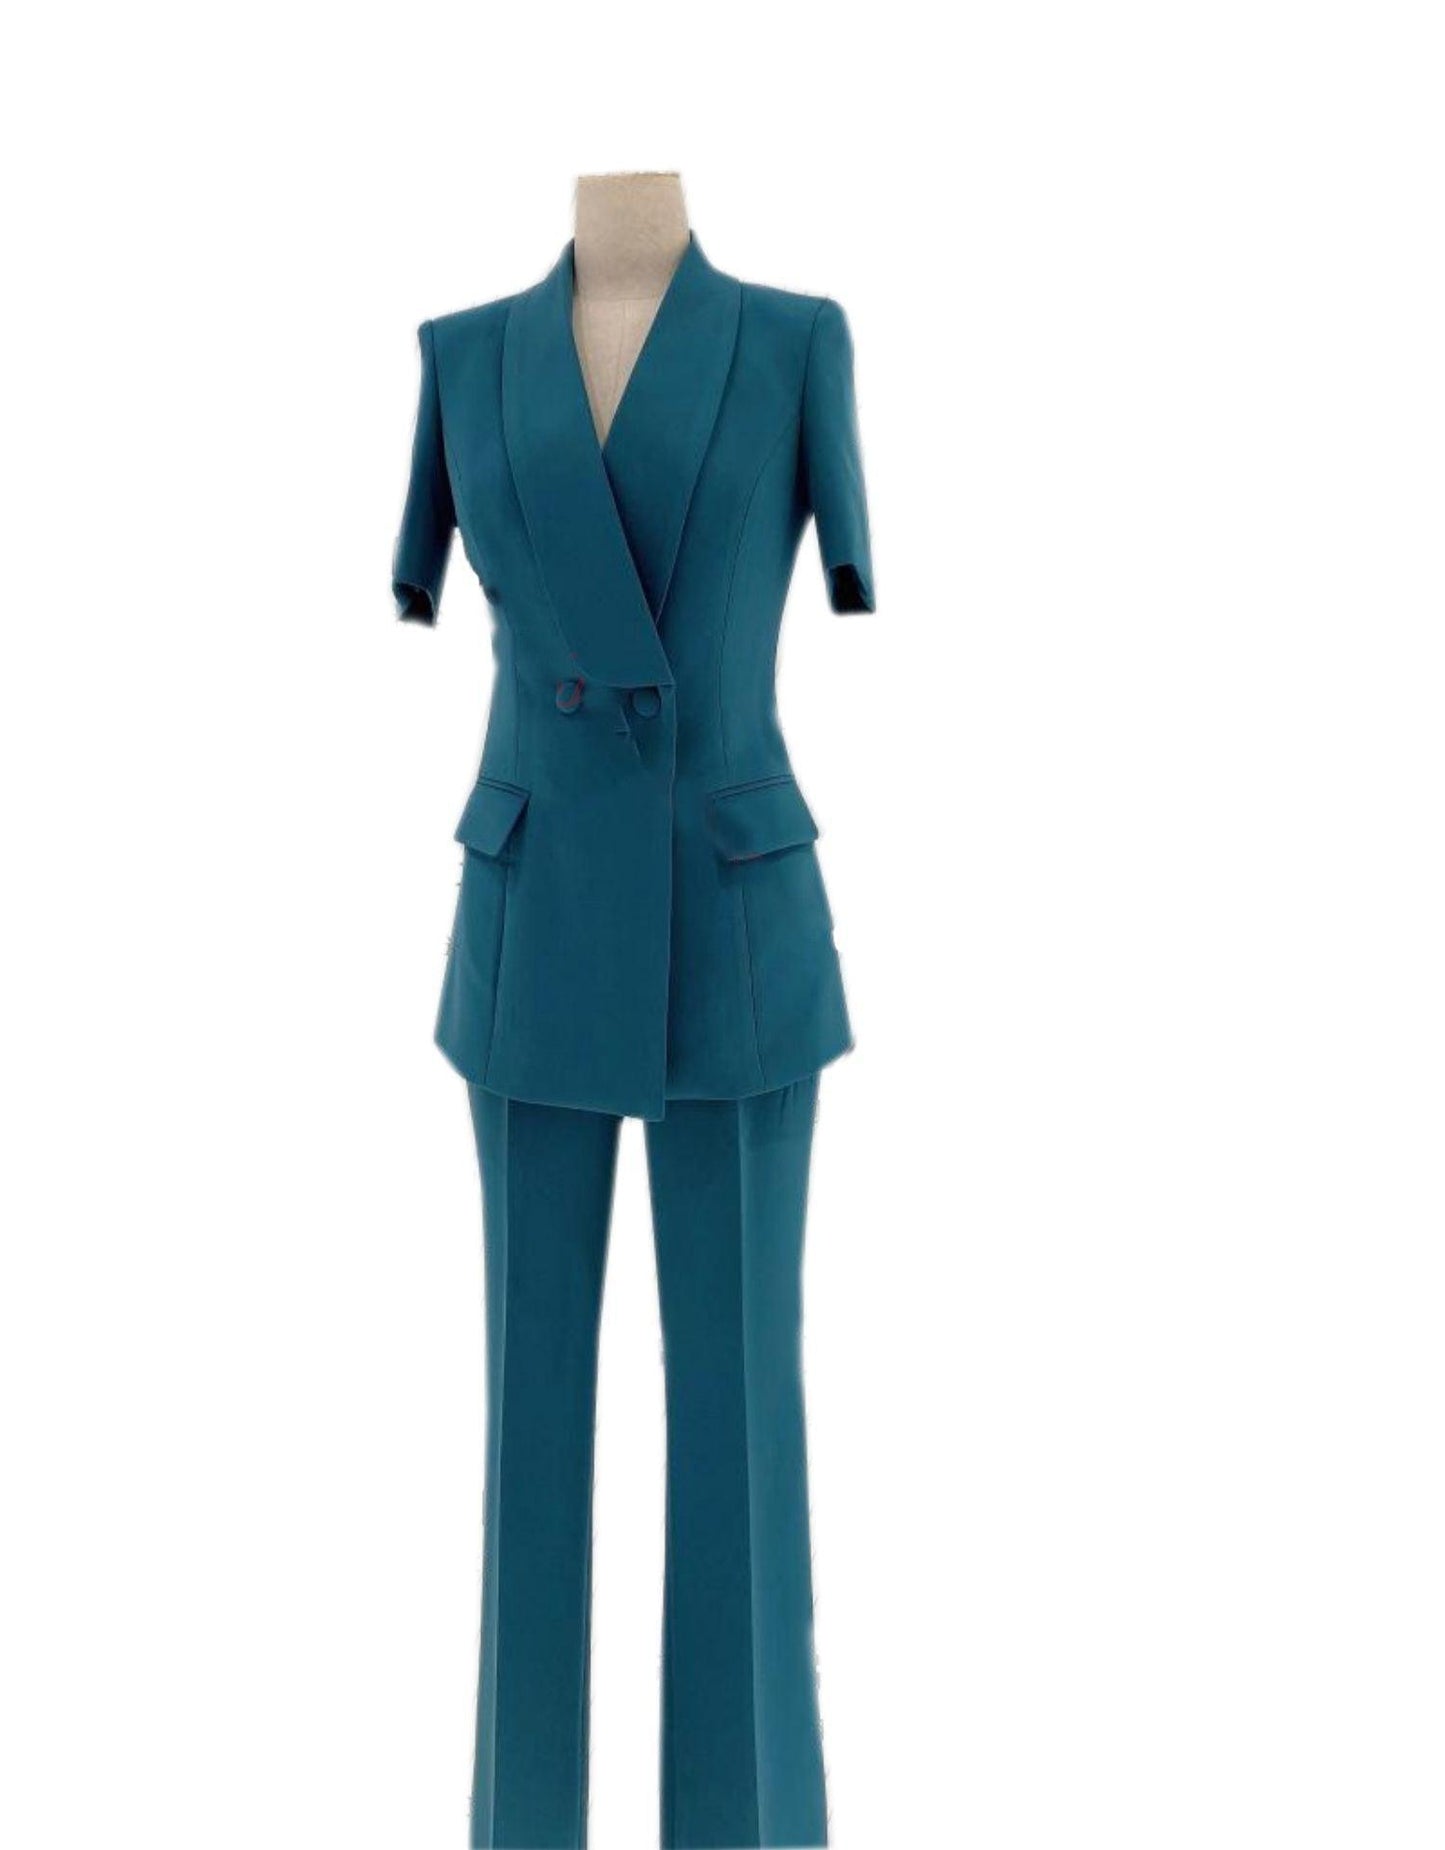 Peacock Blue Short-Sleeved Pantsuit - Women Trouser Suits - Trouser Suit - Pantsuit - Guocali